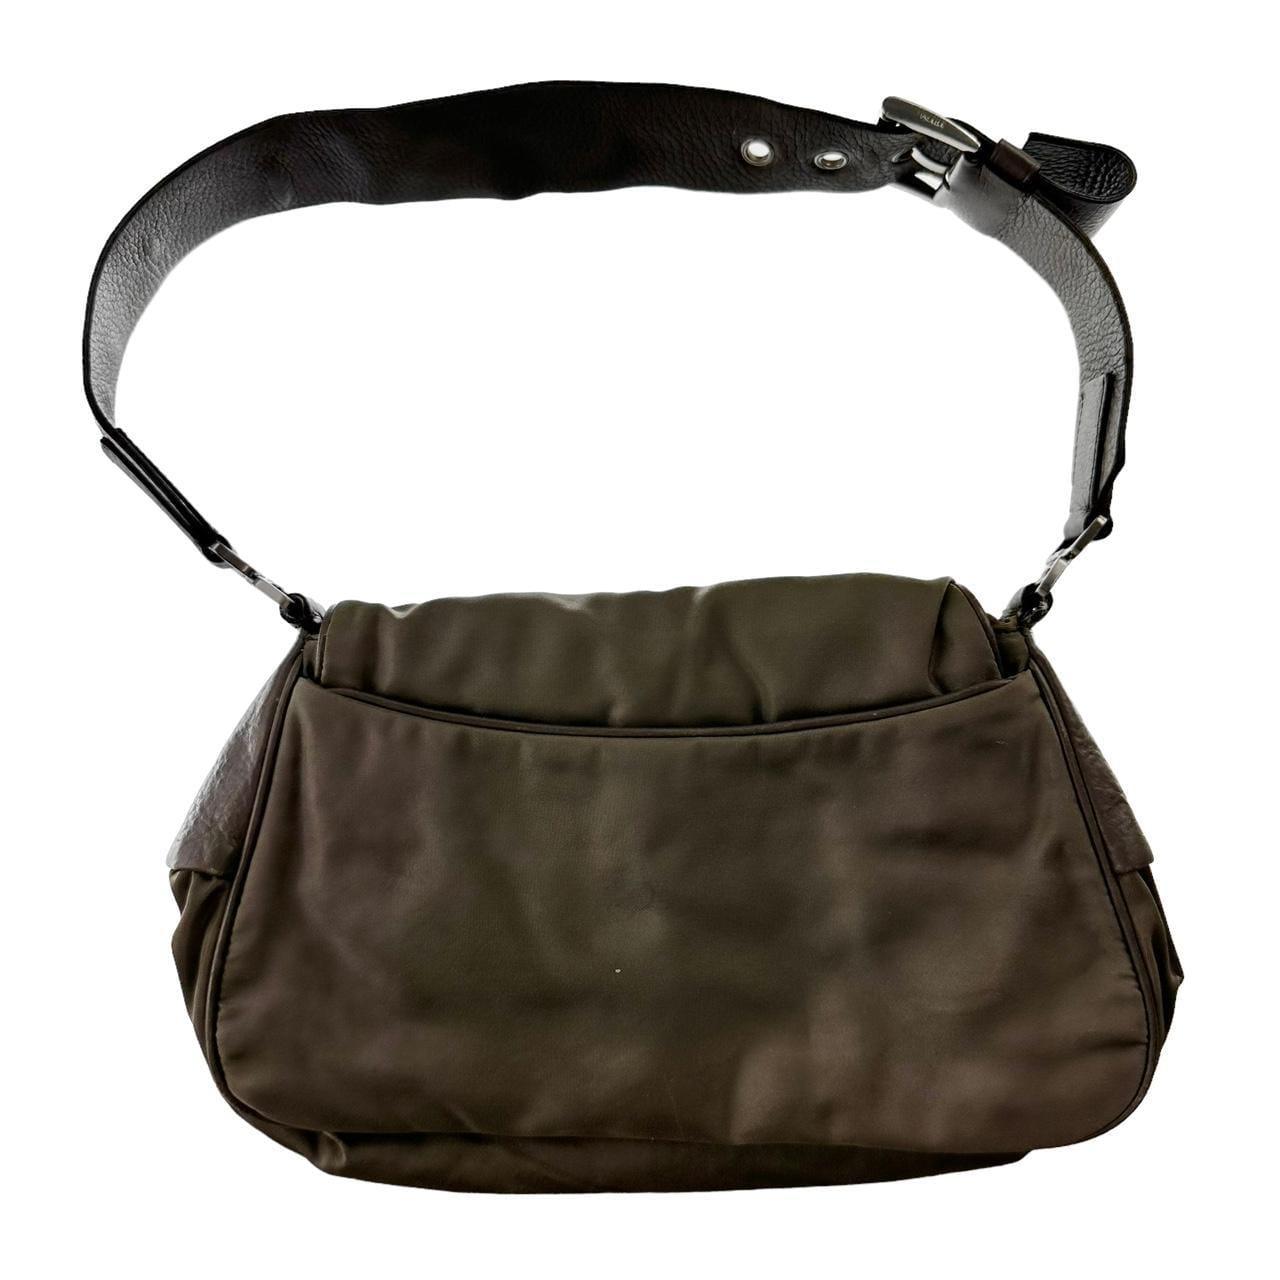 Prada nylon shoulder bag - Known Source